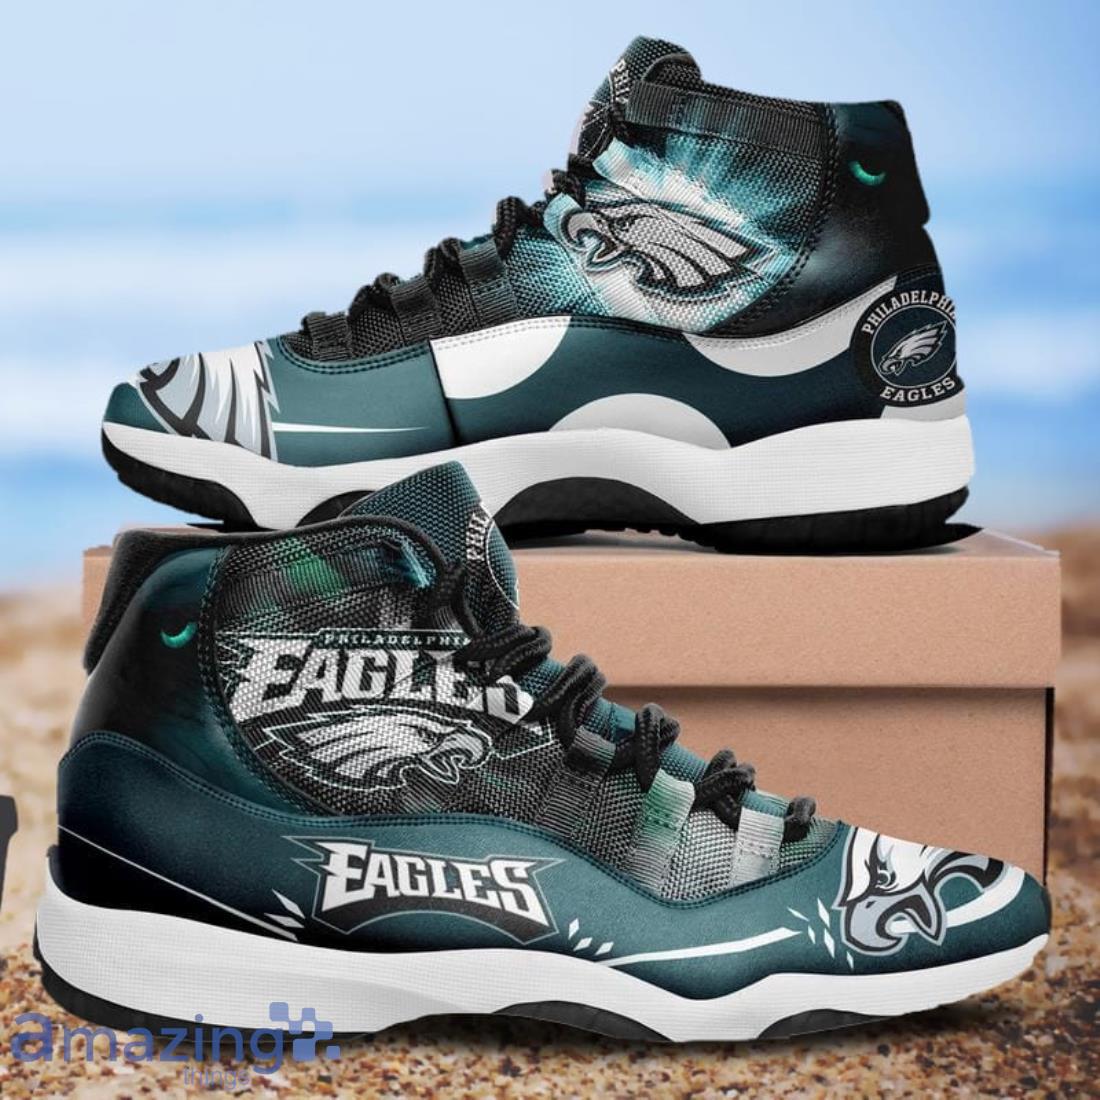 Philadelphia Eagles Sneaker Air Jordan 11 Shoes